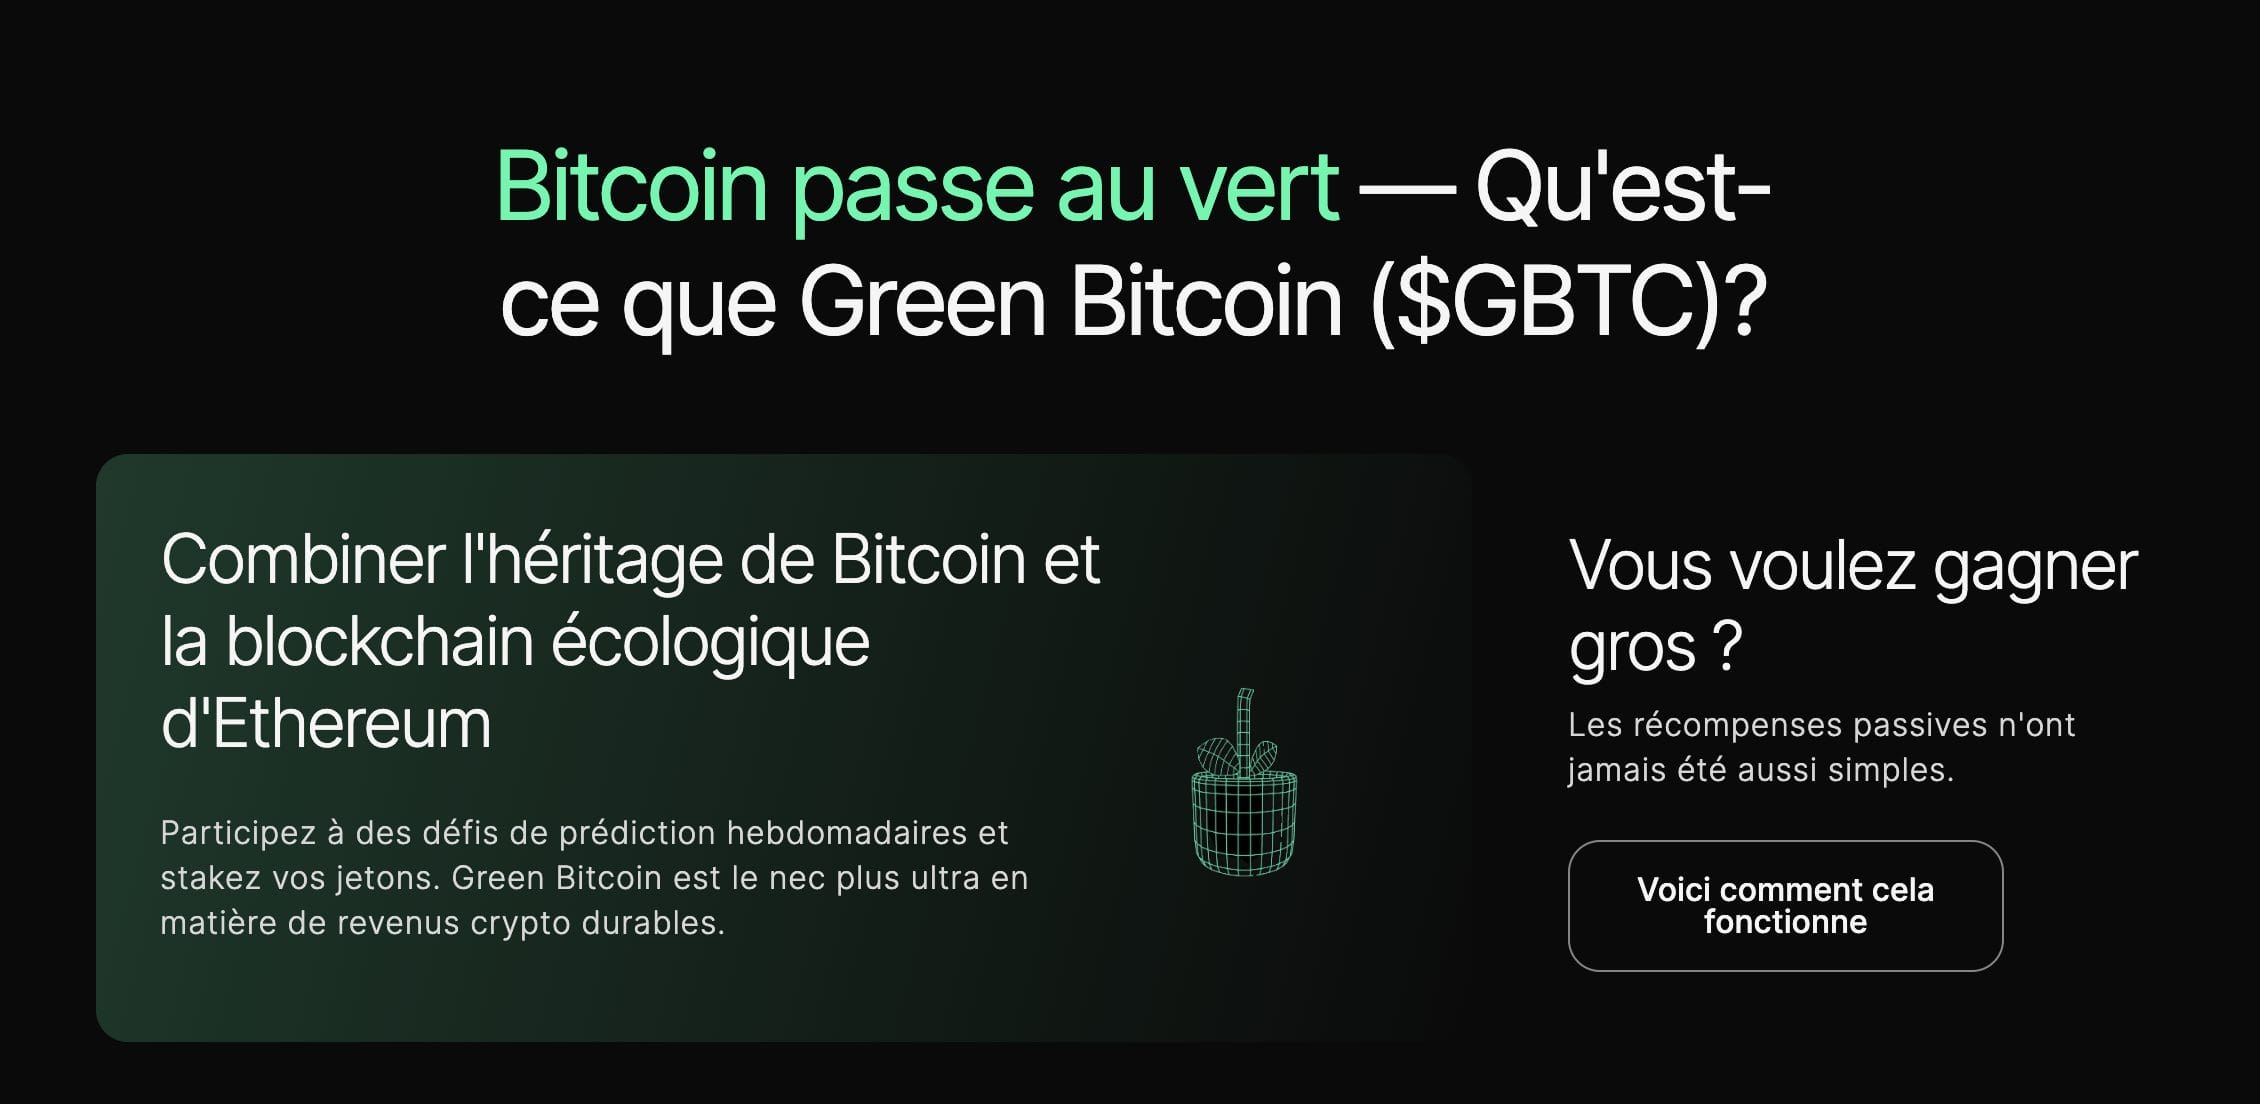 Greenbitcoin est une alternative verte à Bitcoin